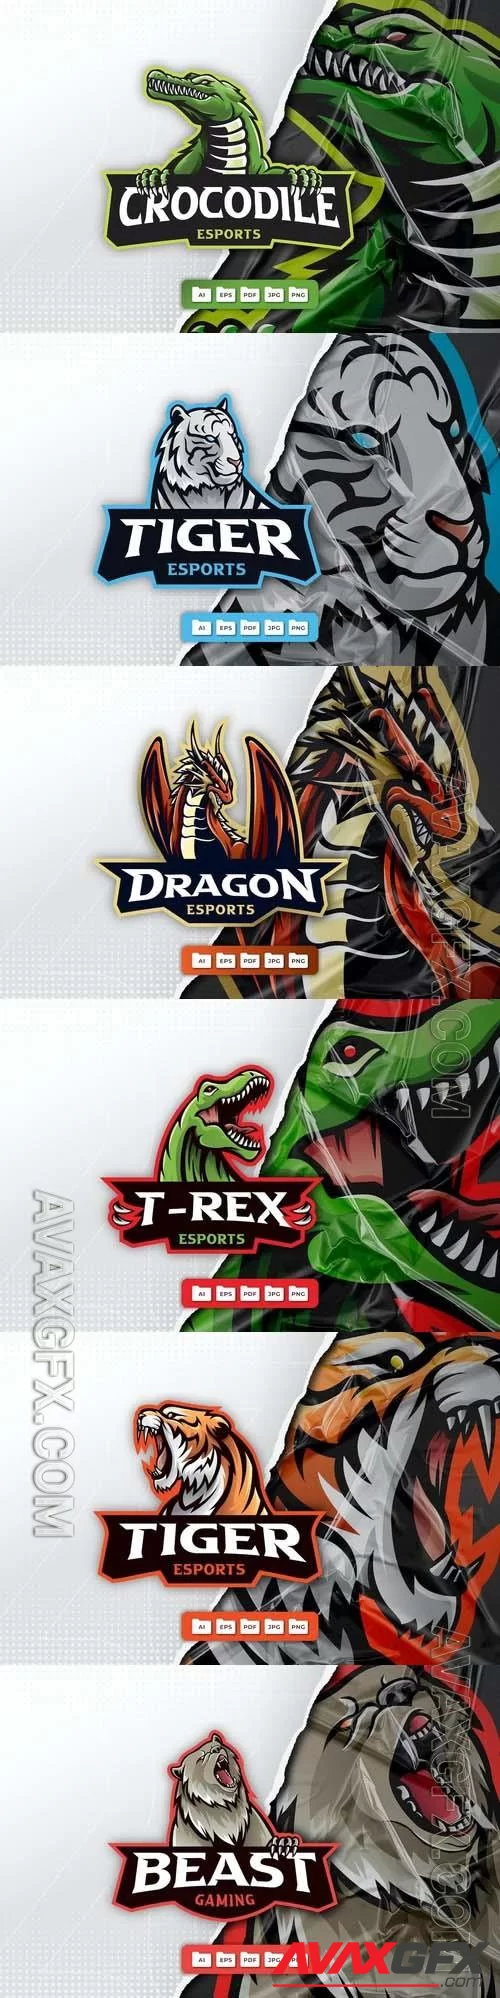 White tiger, t-rex dinosaur, tiger, grizzly bear, dragon, crocodile, mascot logo design